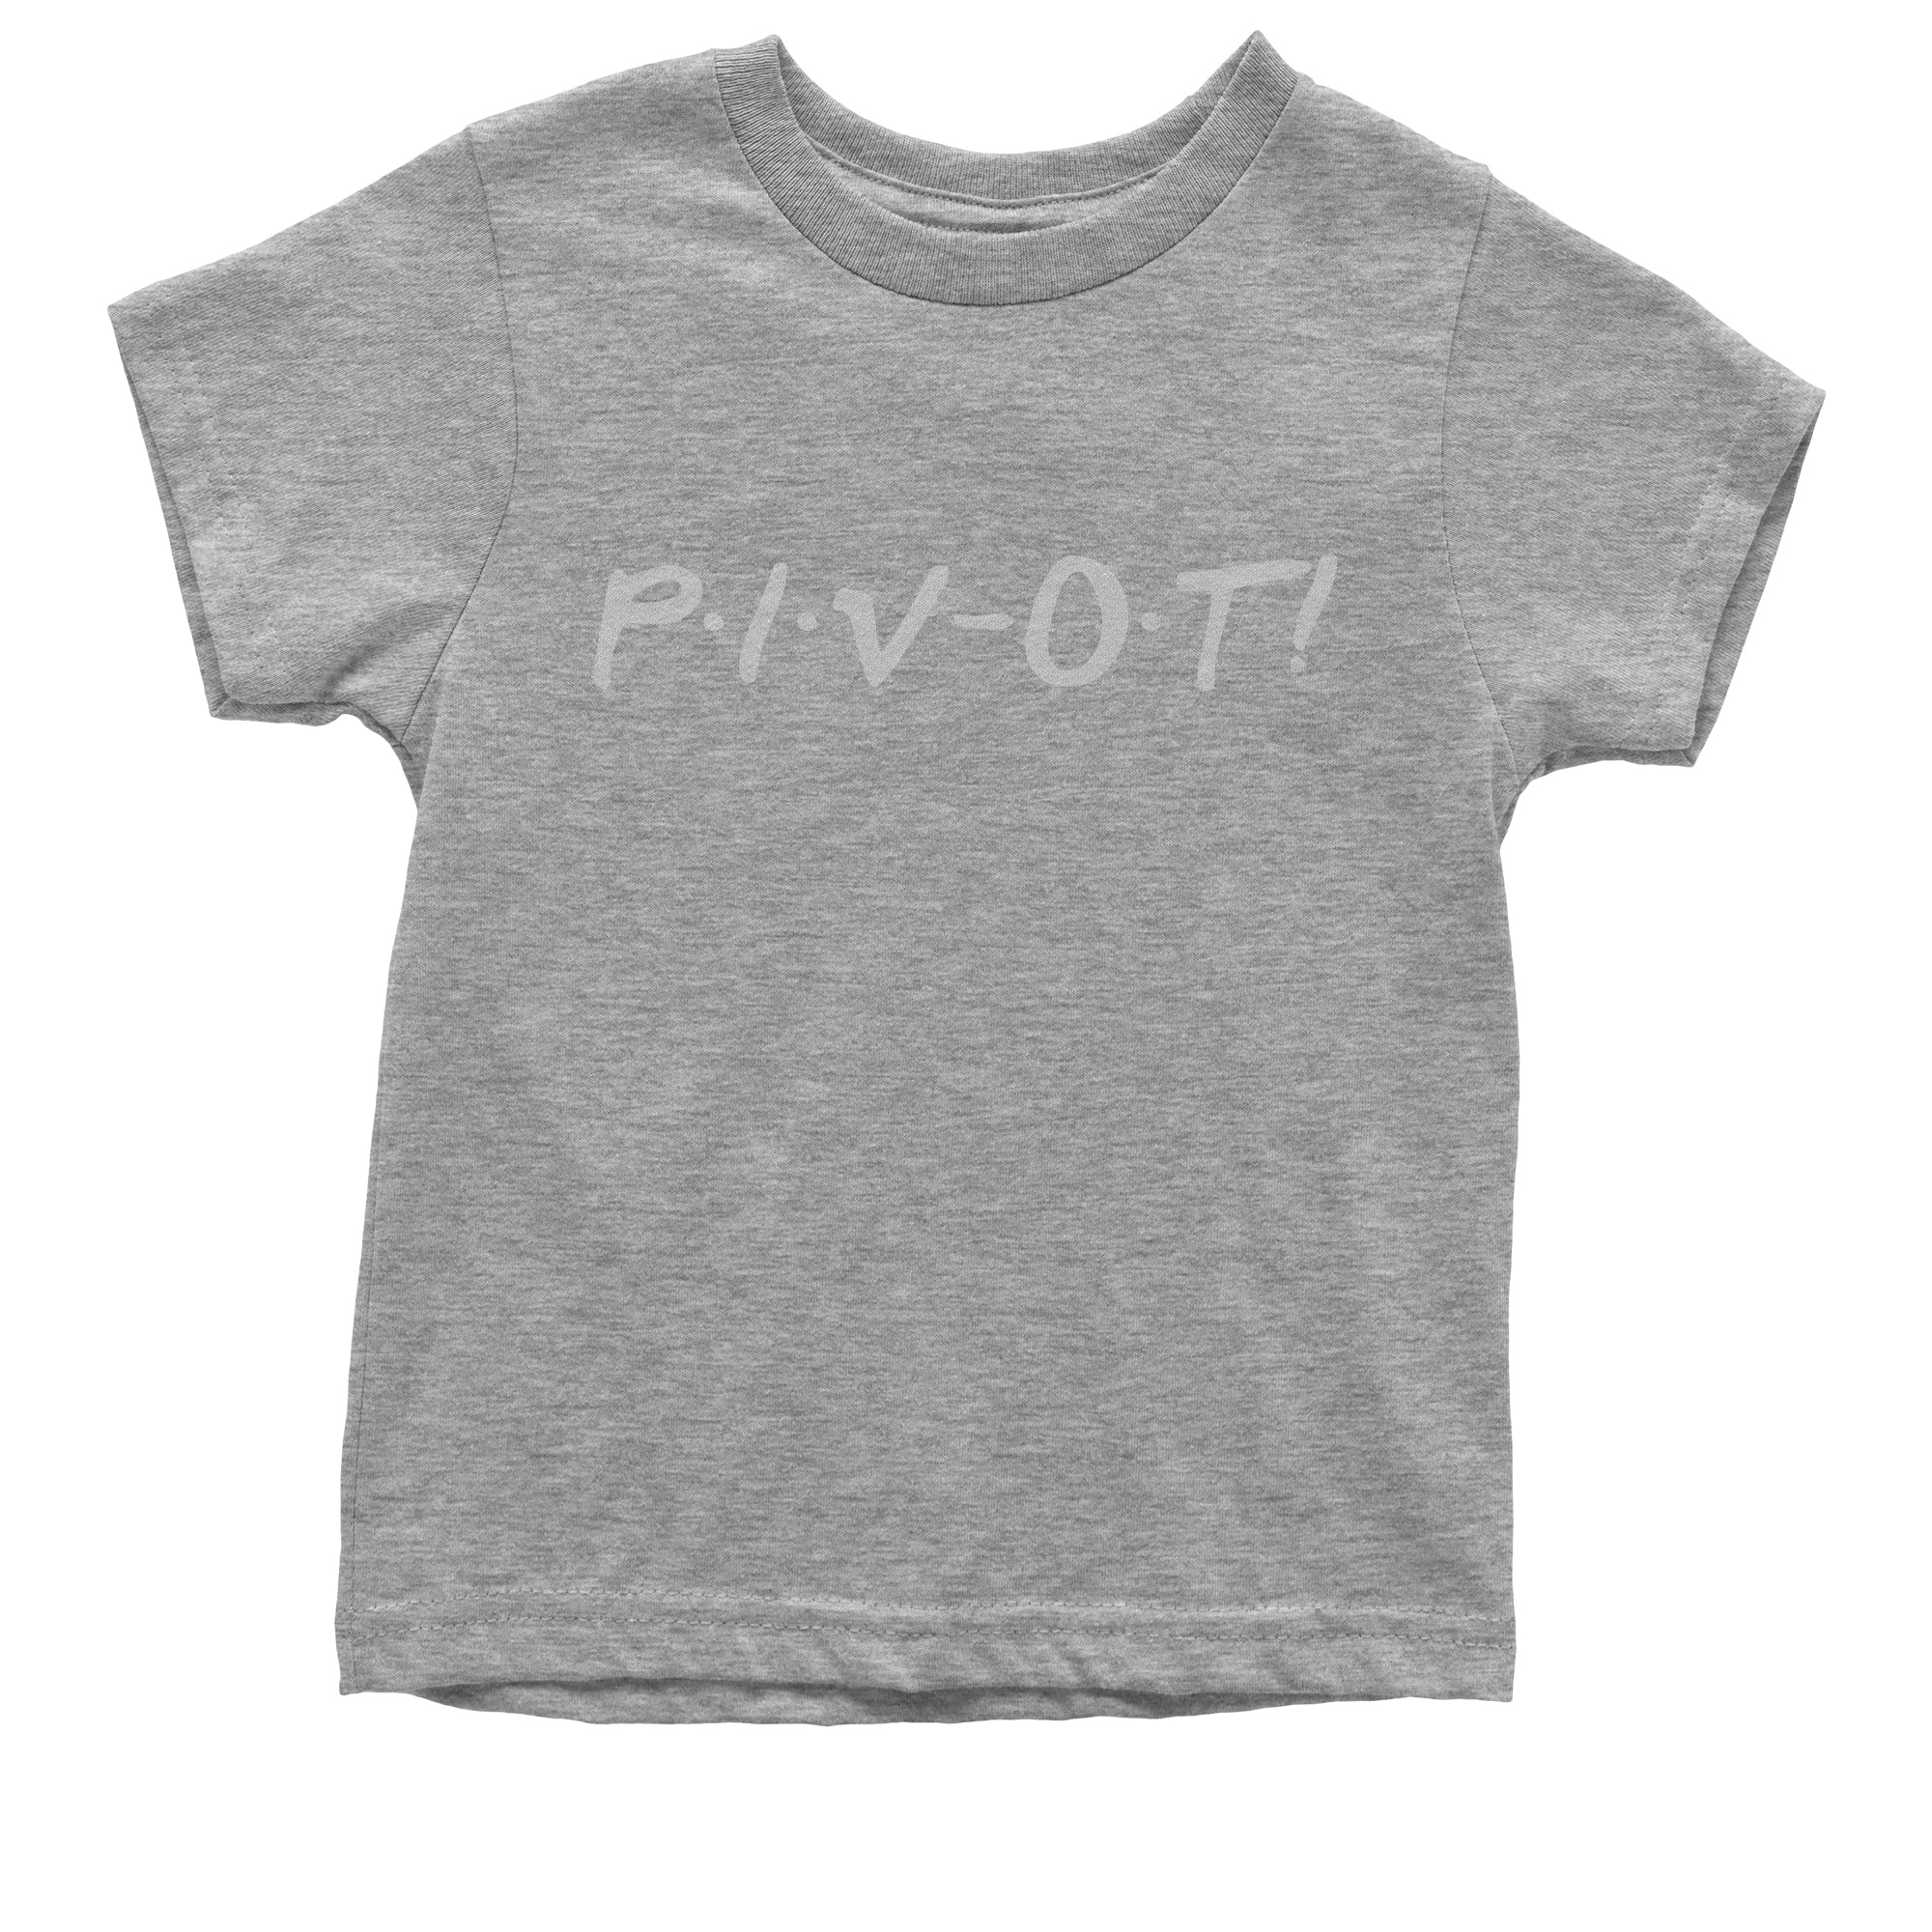 Pivot Friends Kid's T-Shirt